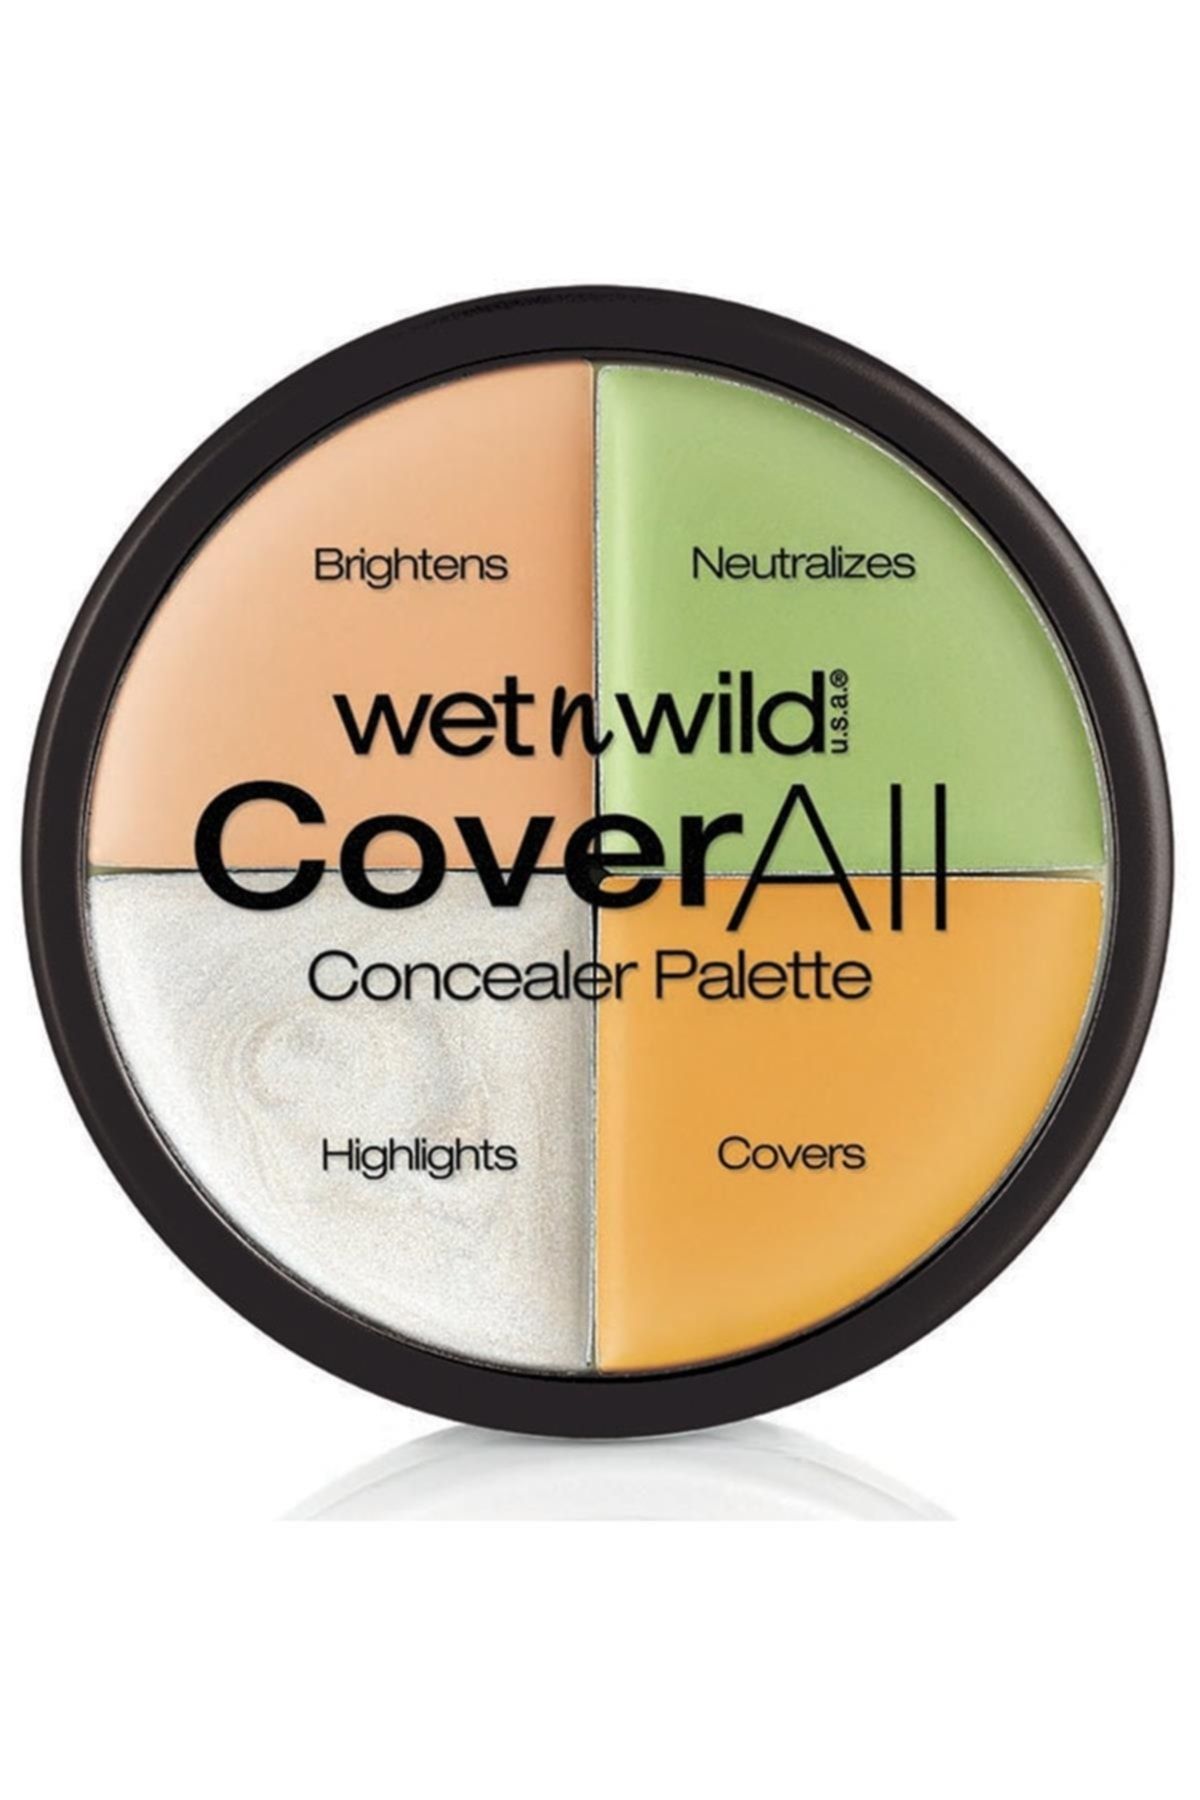 WET N WİLD Marka: Coverall Concealer Palette Kapatıcı Paleti Kategori: Kapatıcı